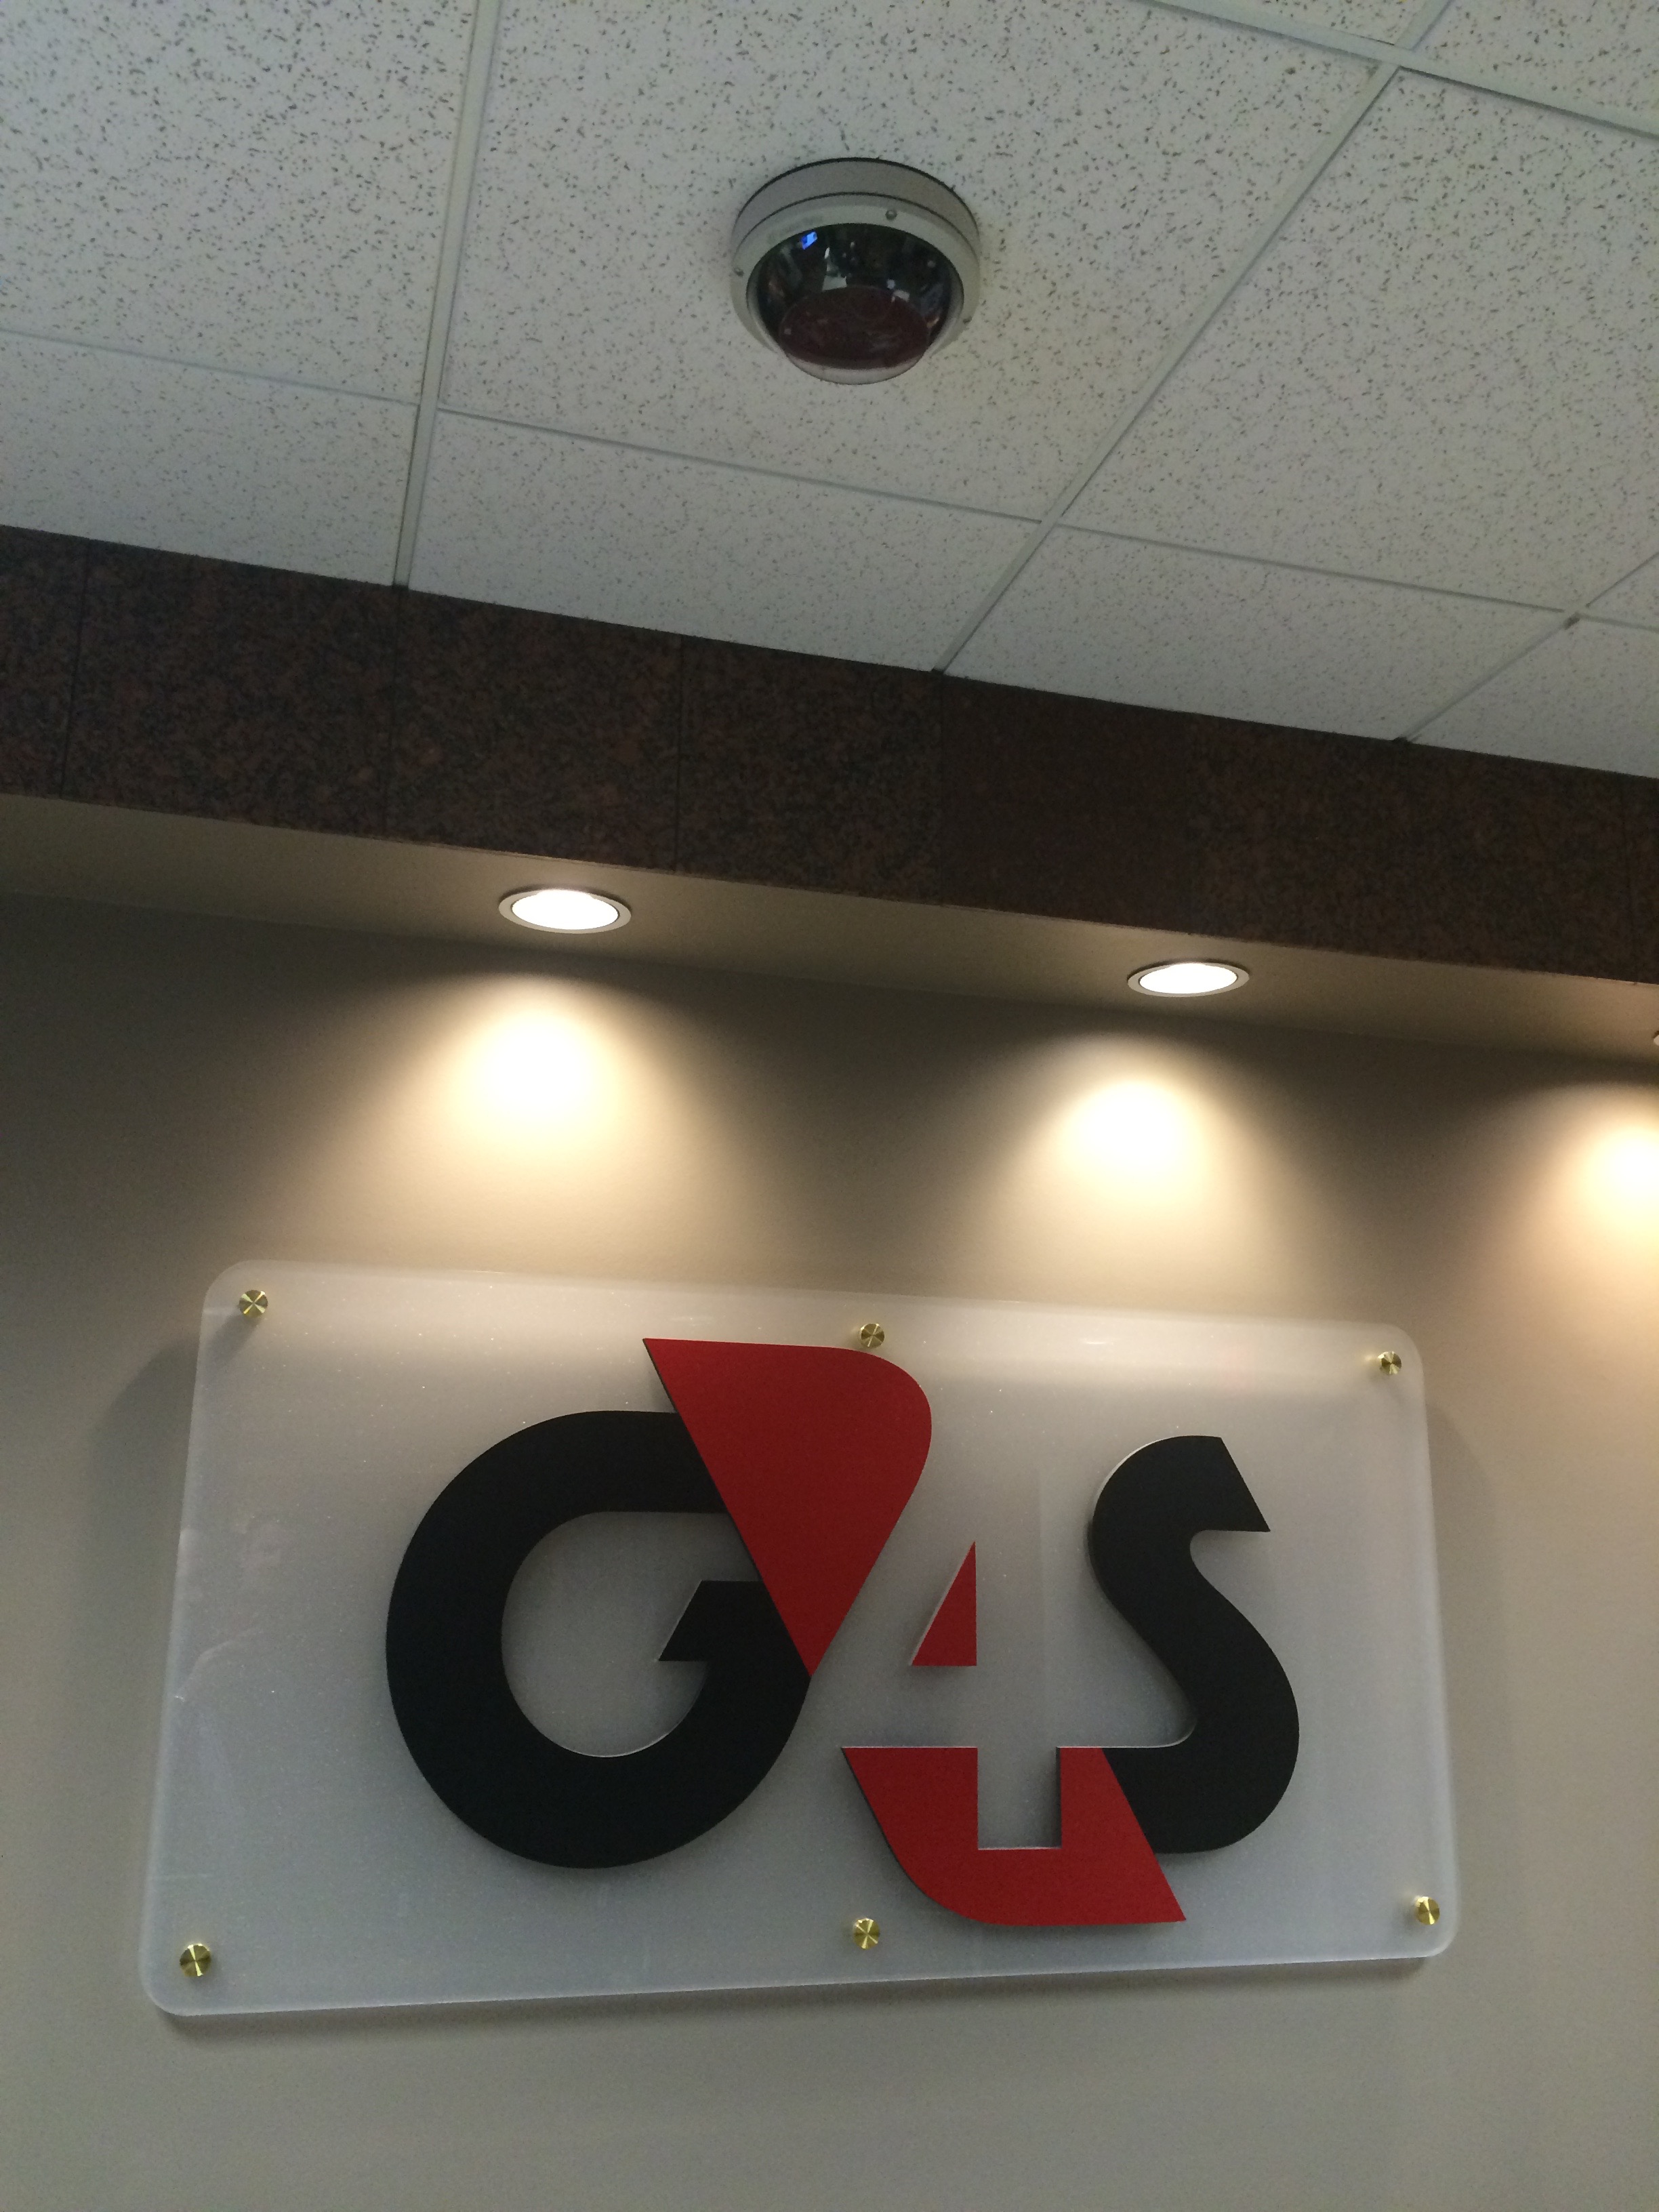 G4S Office Lobby, Omaha, Nebraska